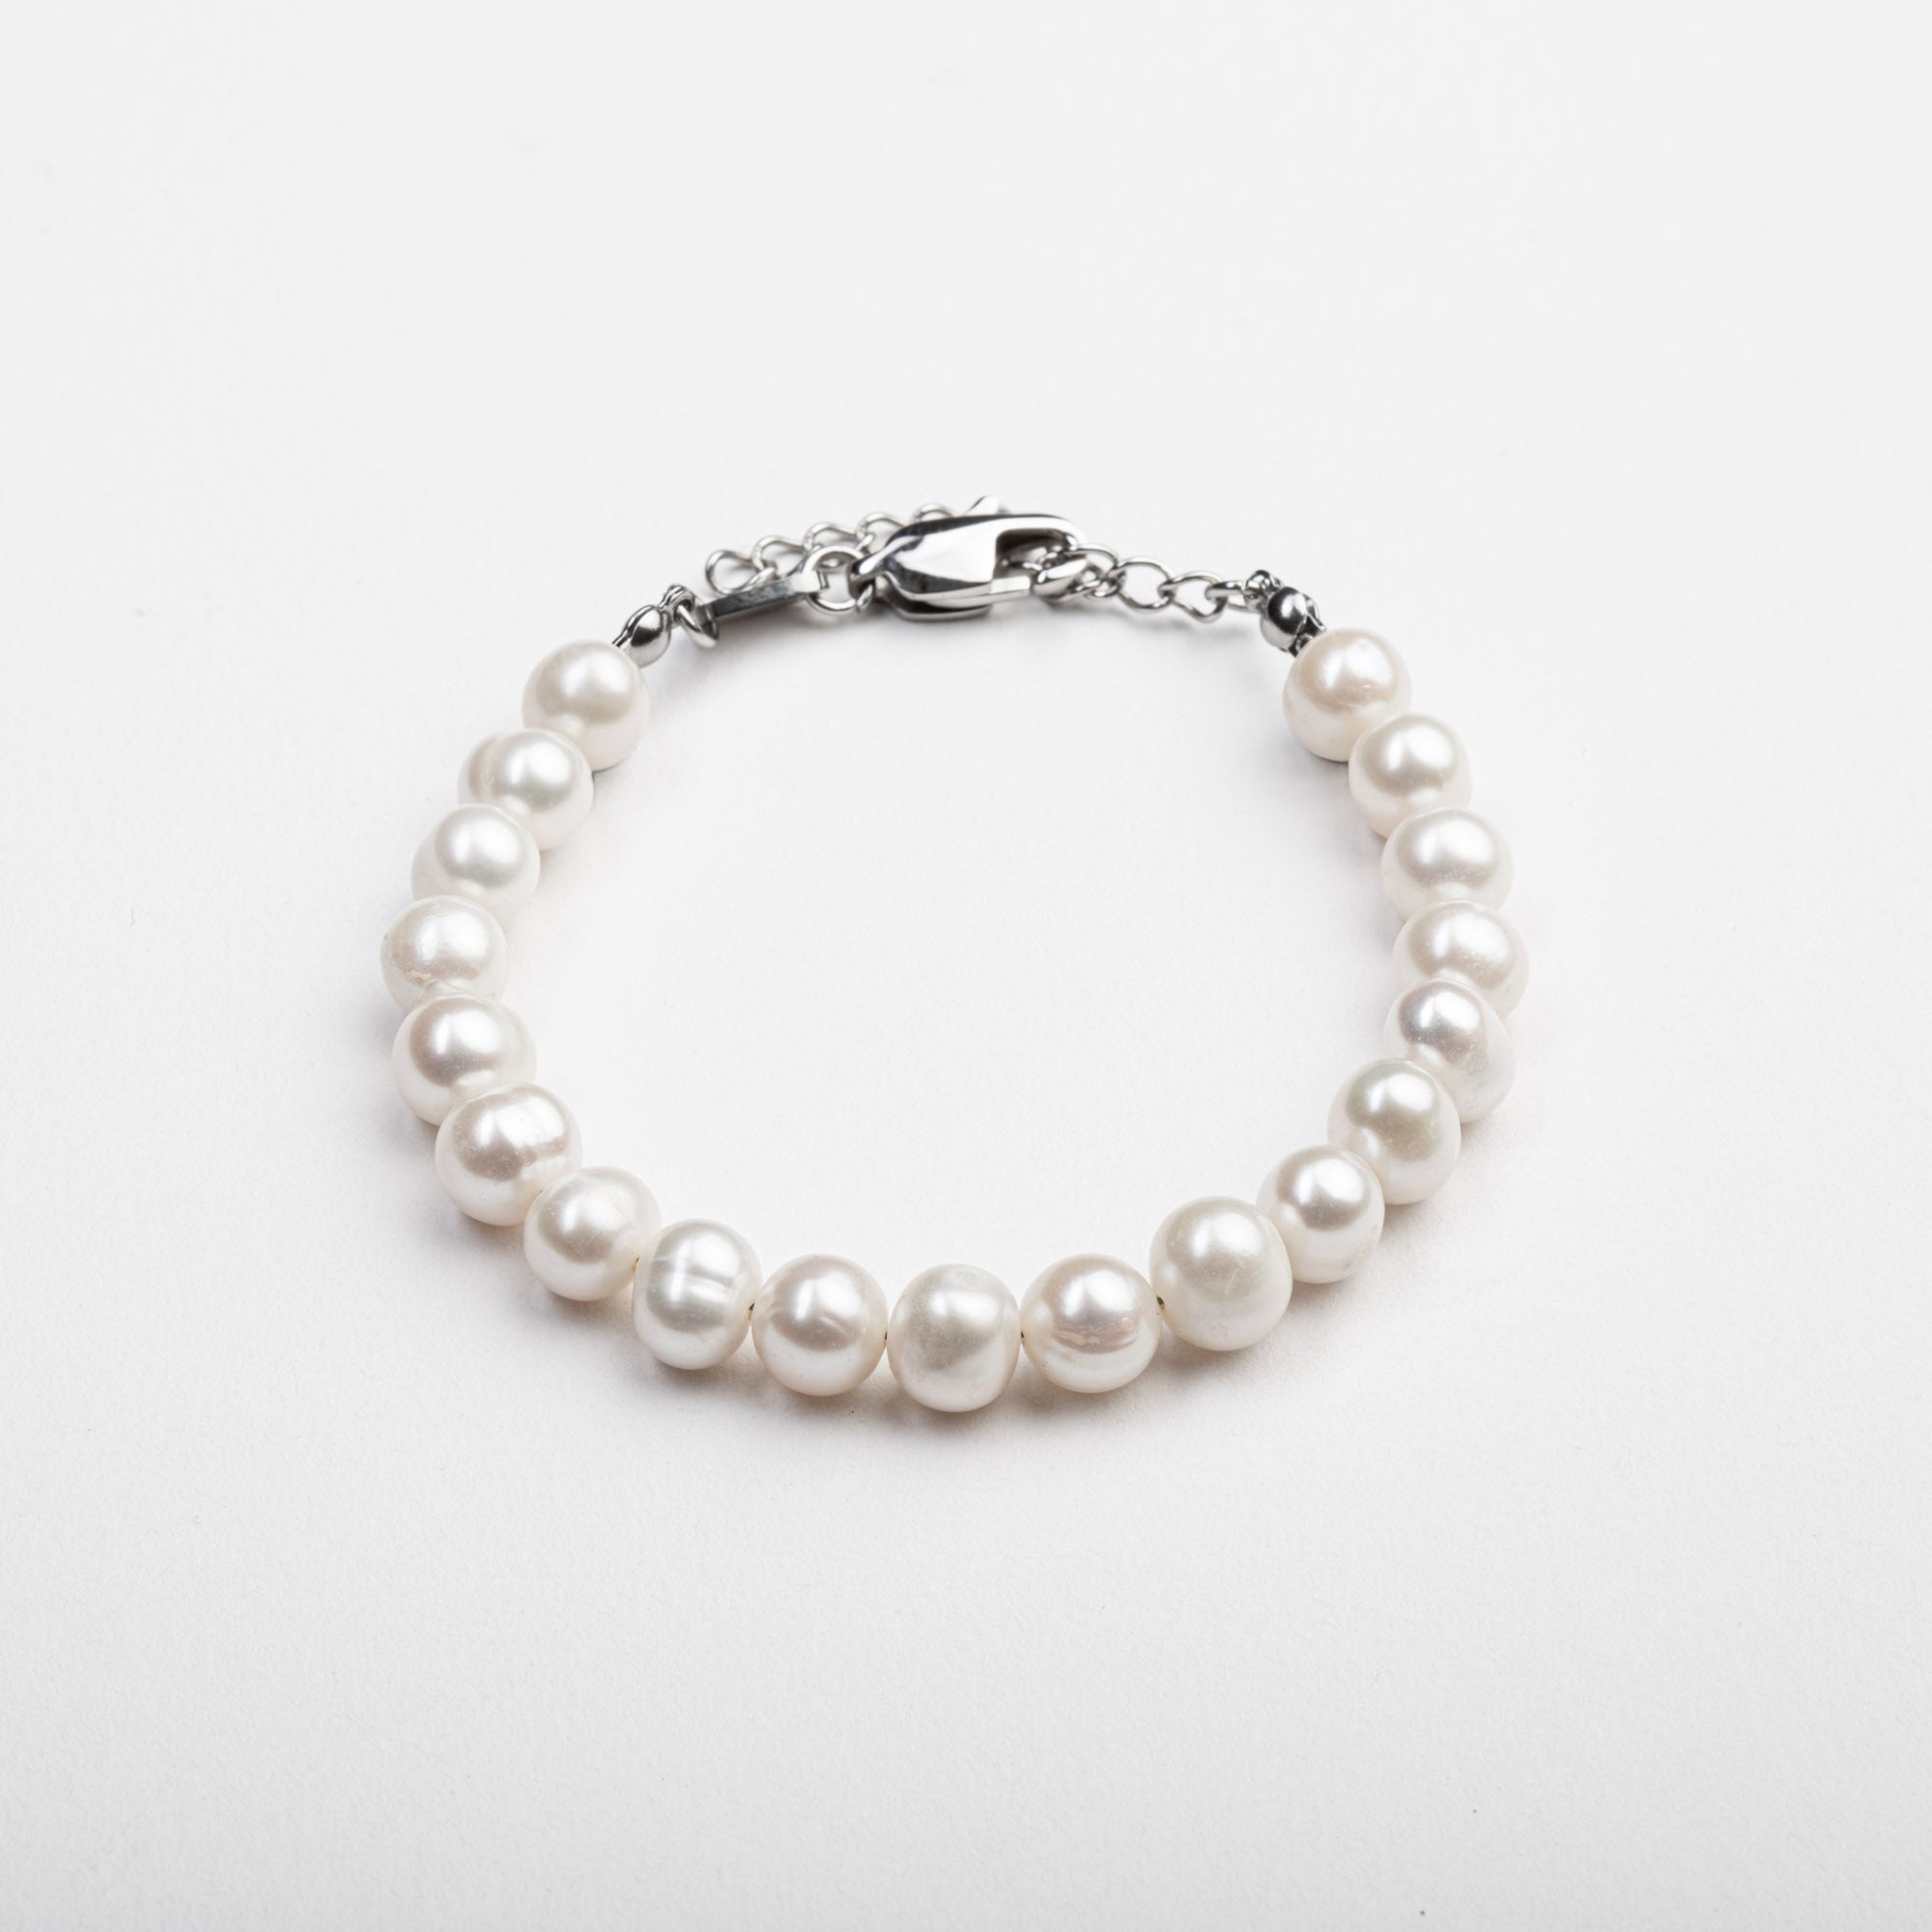 Freshwater pearl bracelet adjustable - round